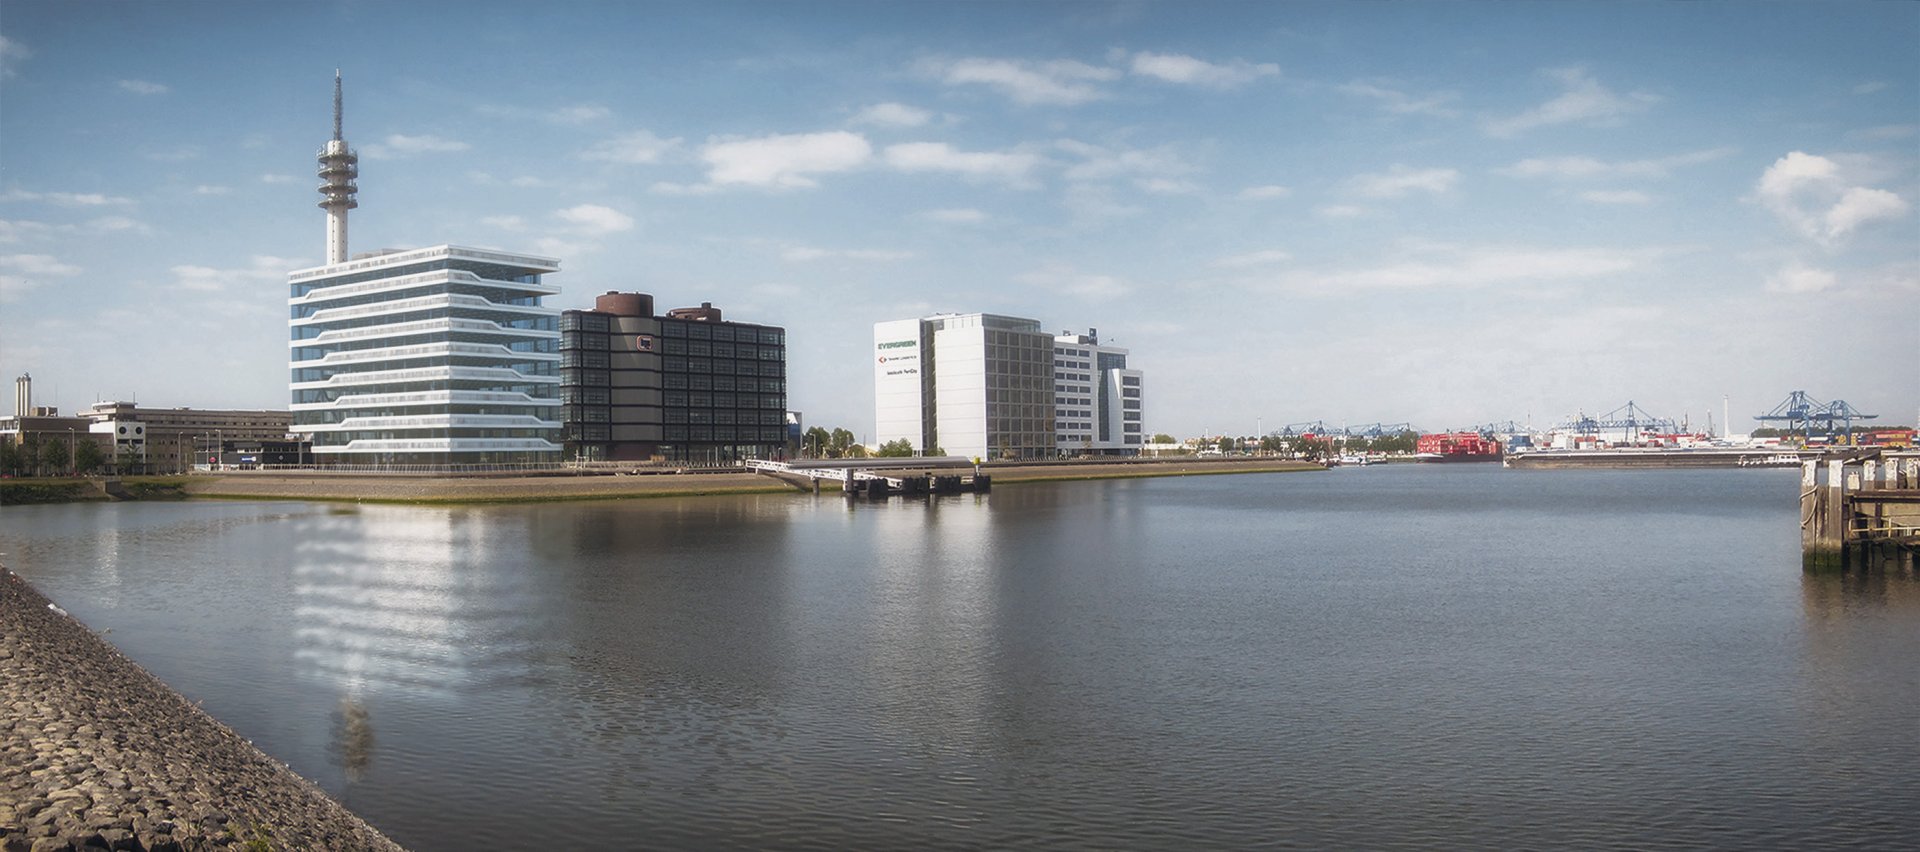 Rotterdam Port City 2